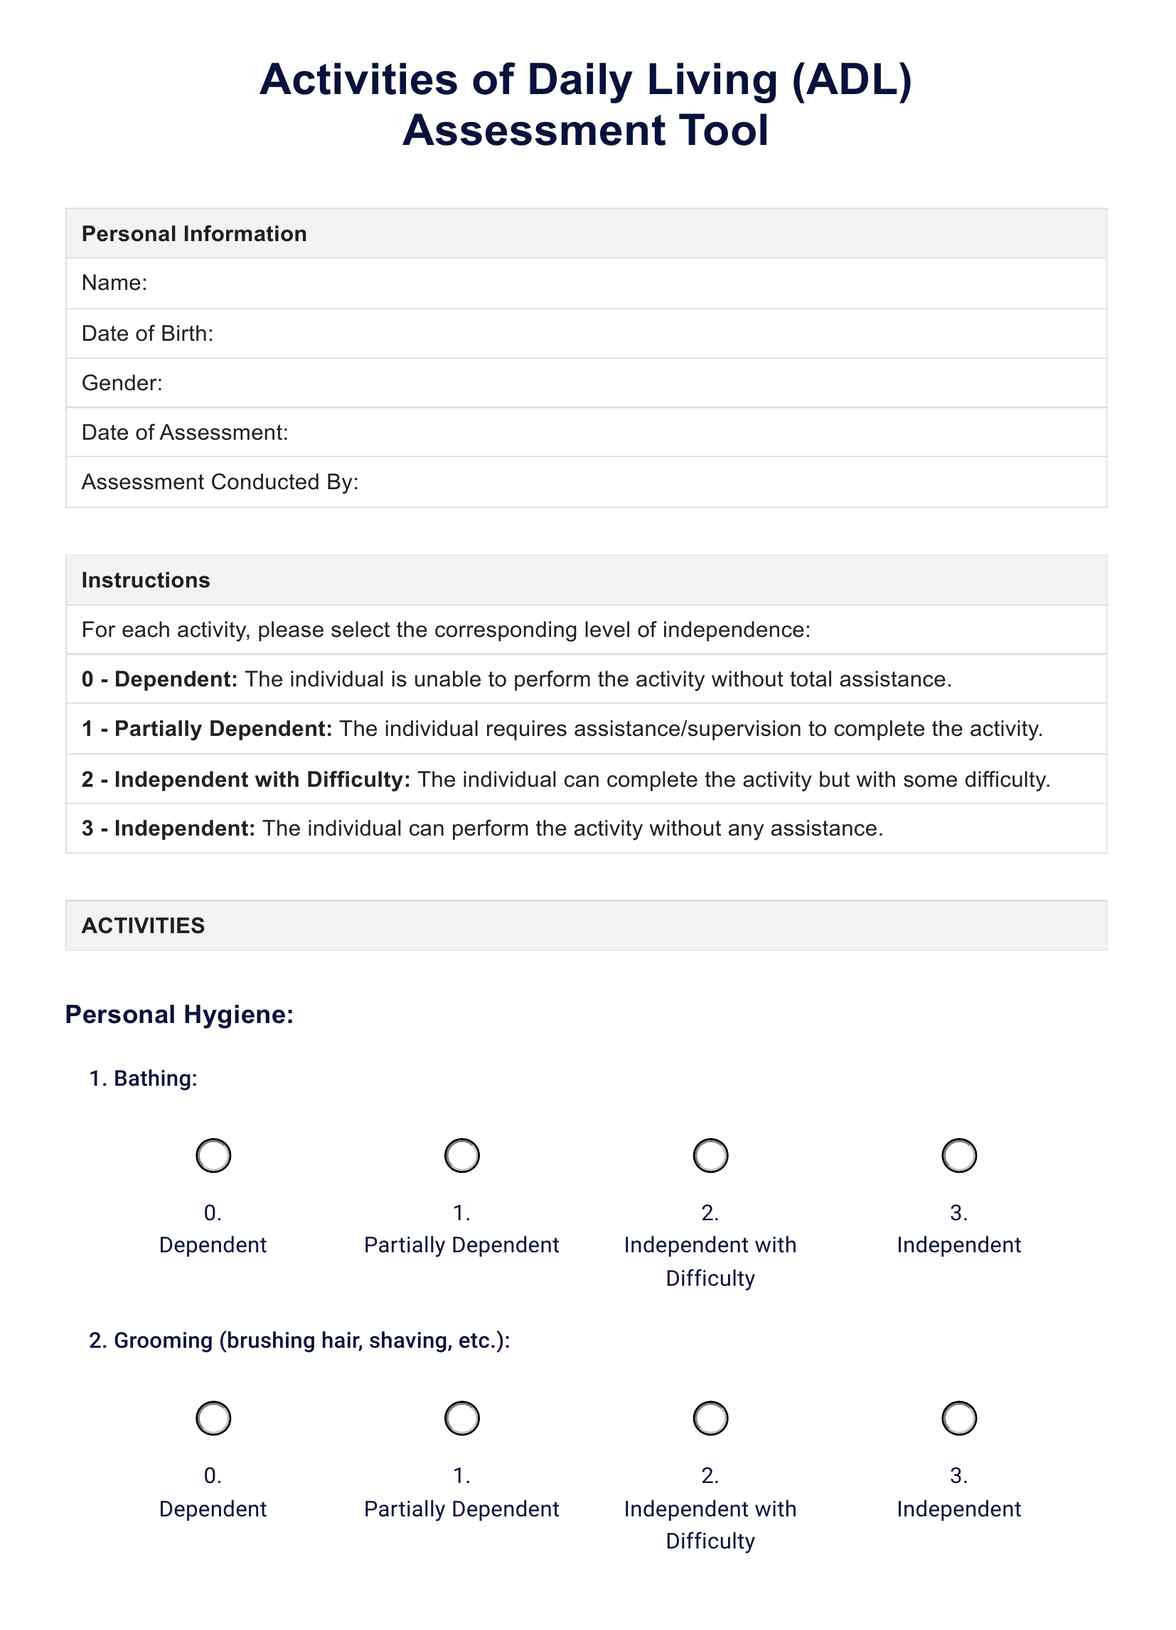 ADL Assessment Tool PDF Example